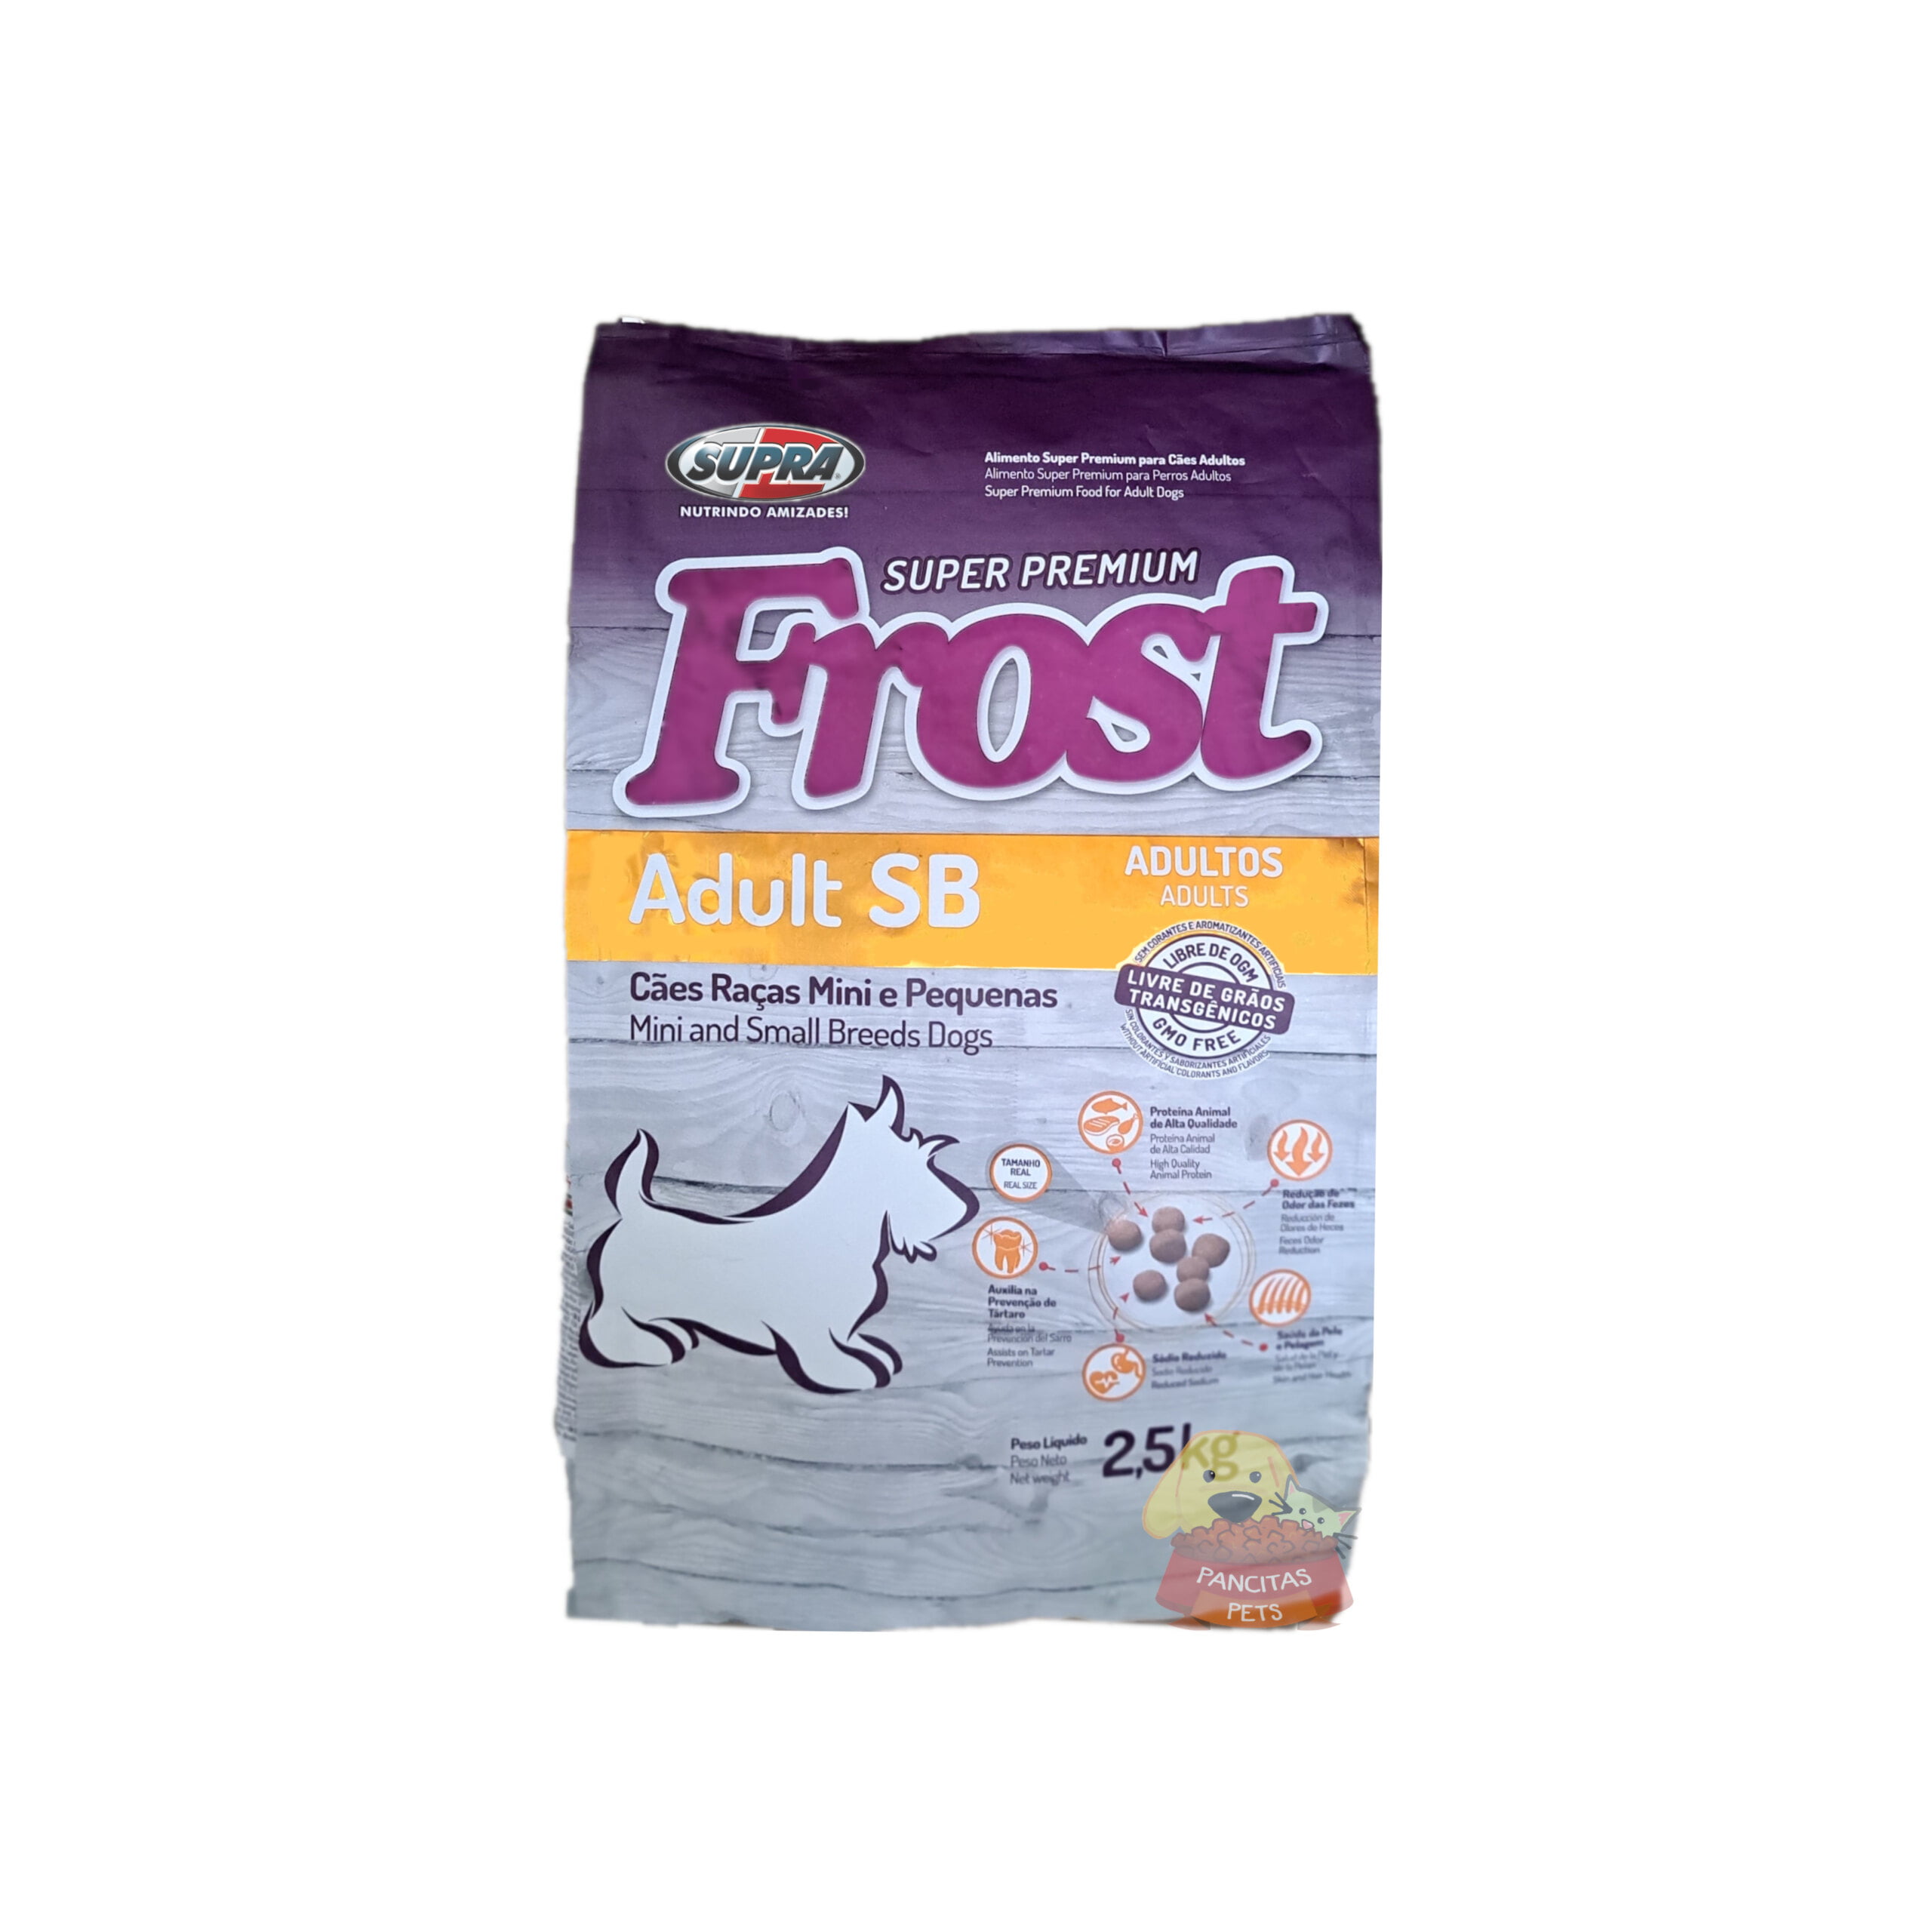 Frost Adult SB PancitasPets